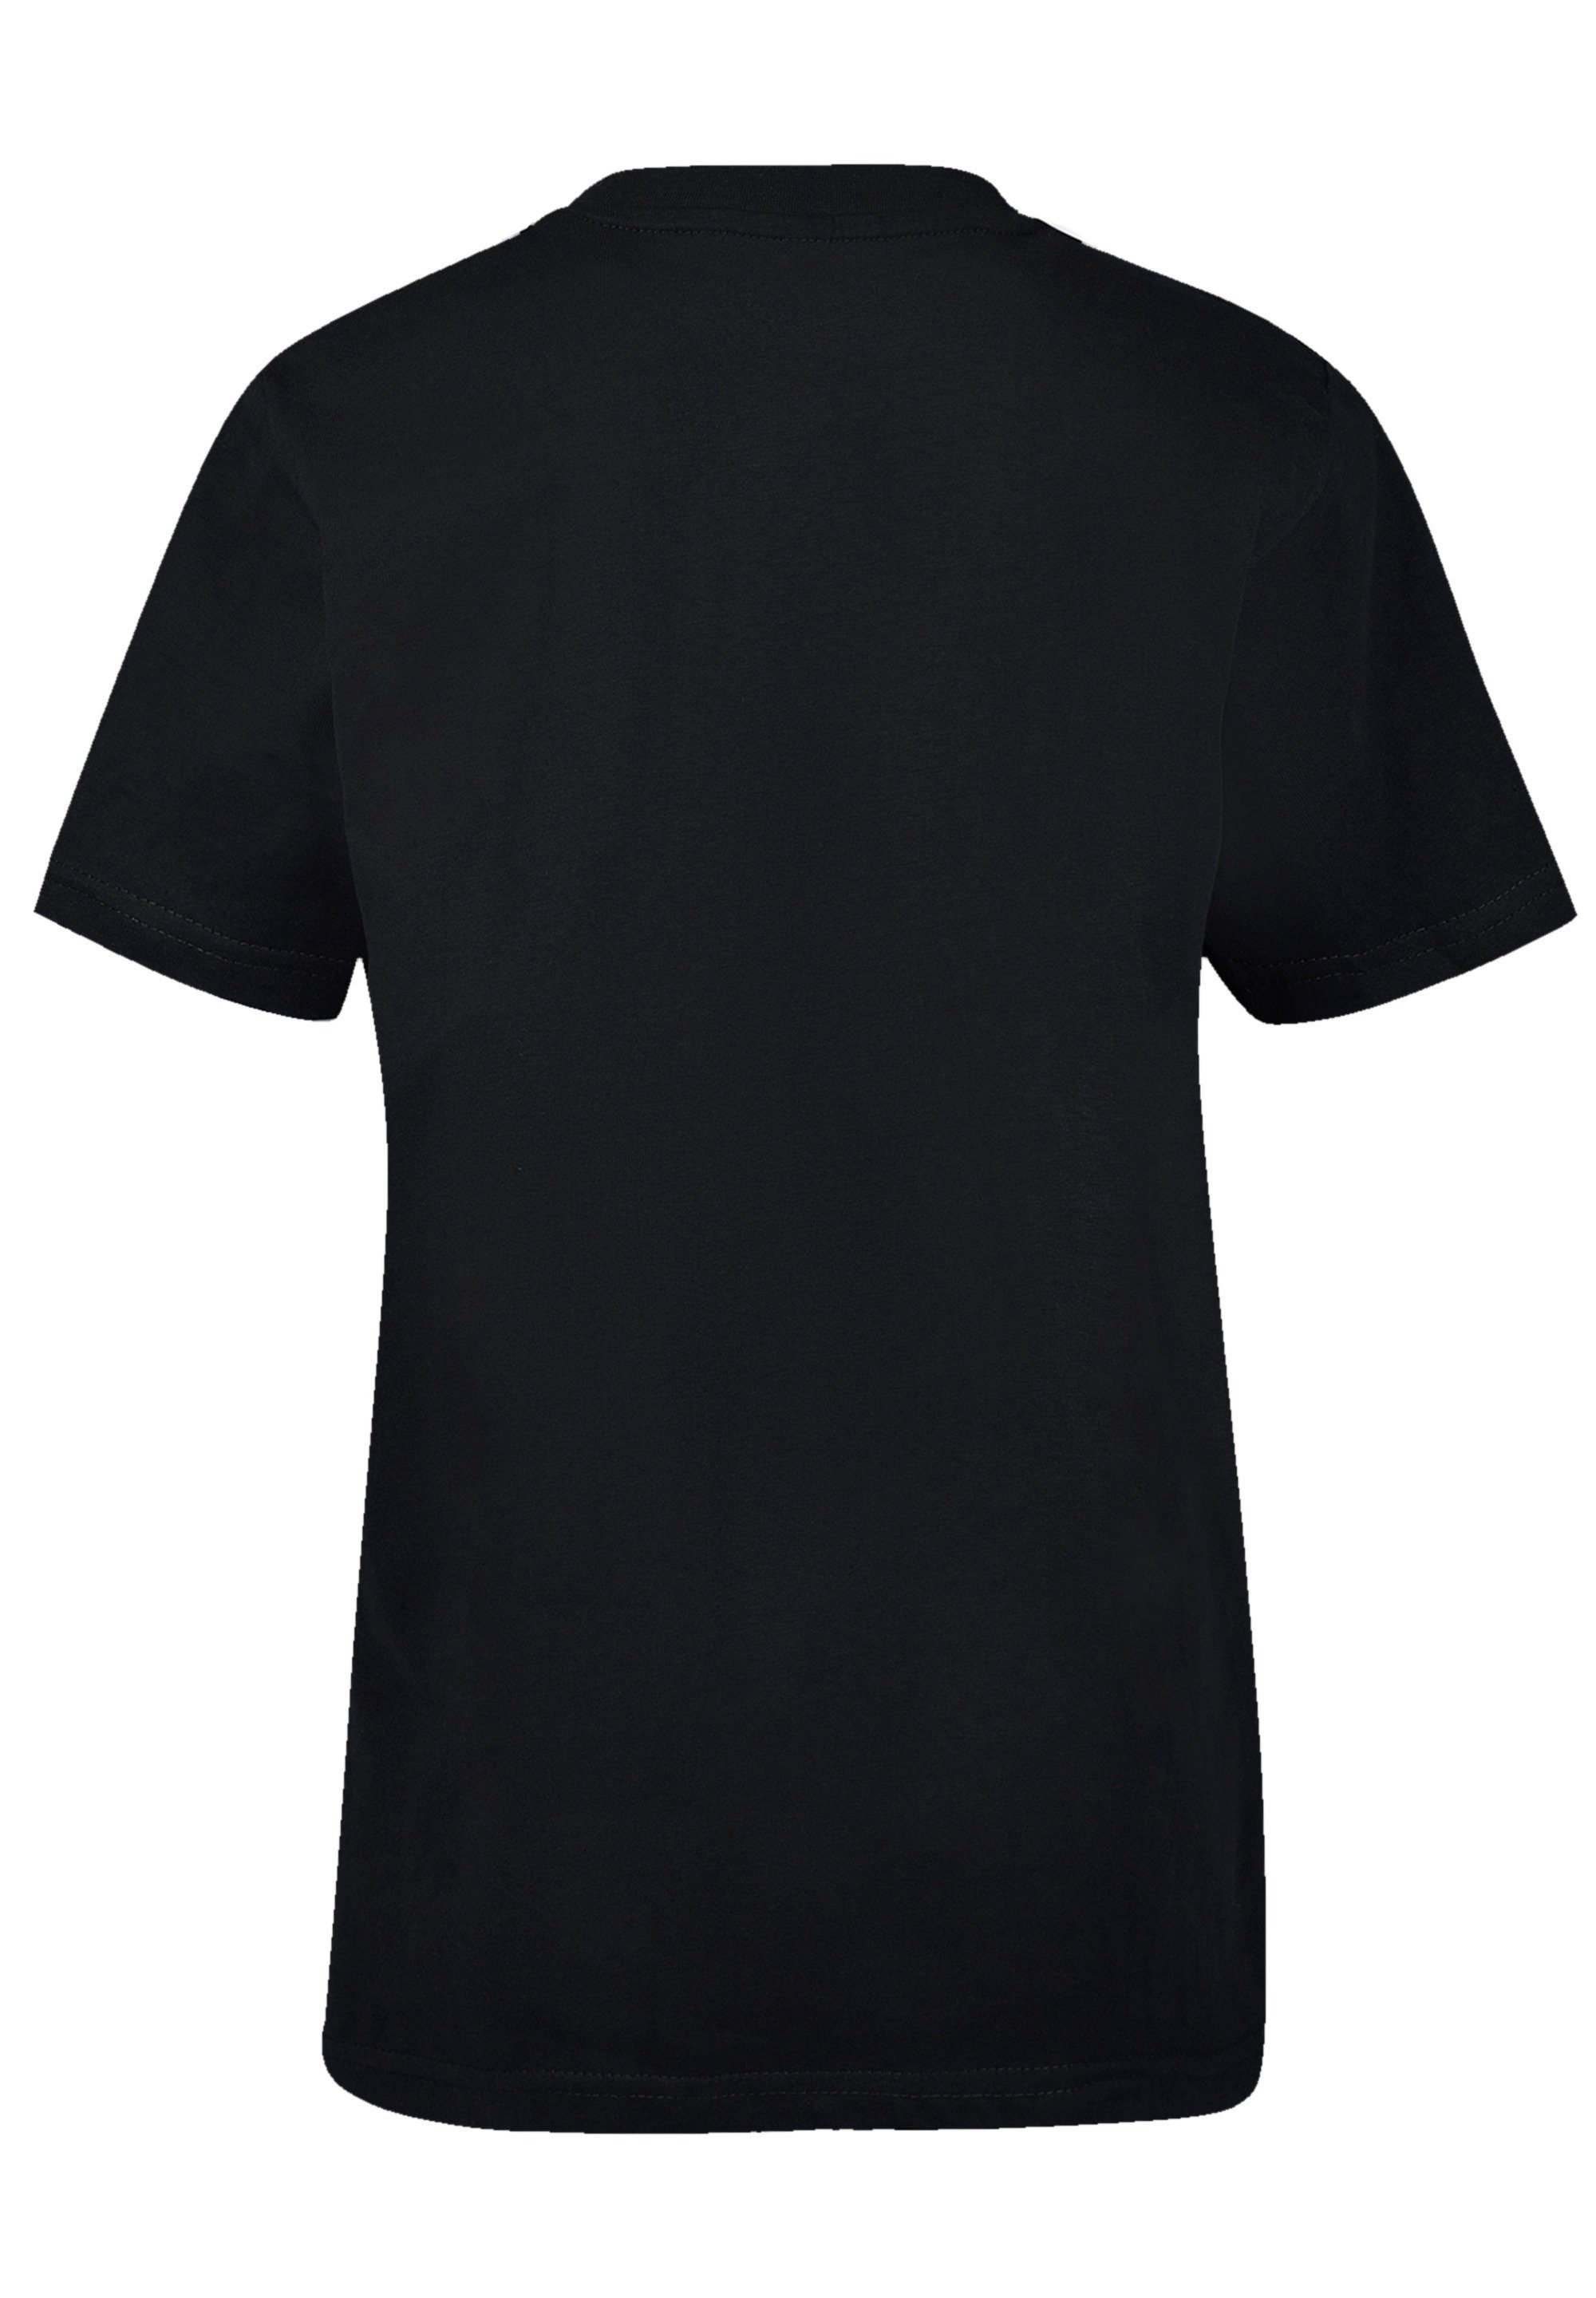 schwarz Leewards F4NT4STIC Bora Bora T-Shirt Print Island